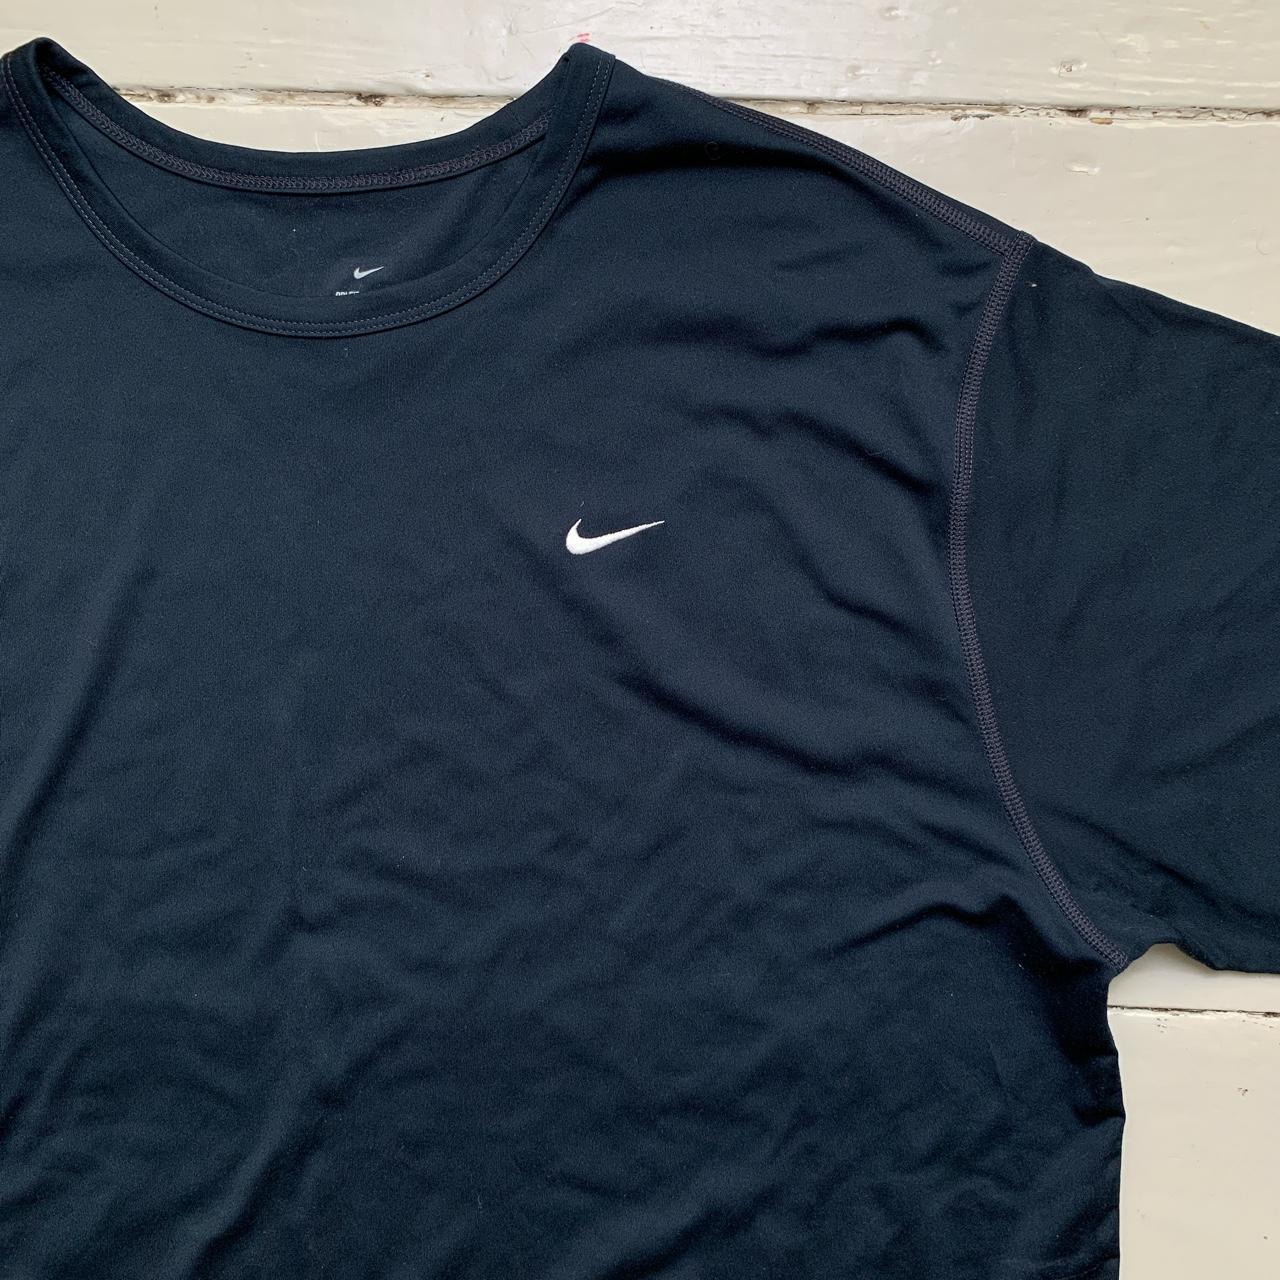 Nike Dri Fit Vintage Swoosh Navy and White T Shirt